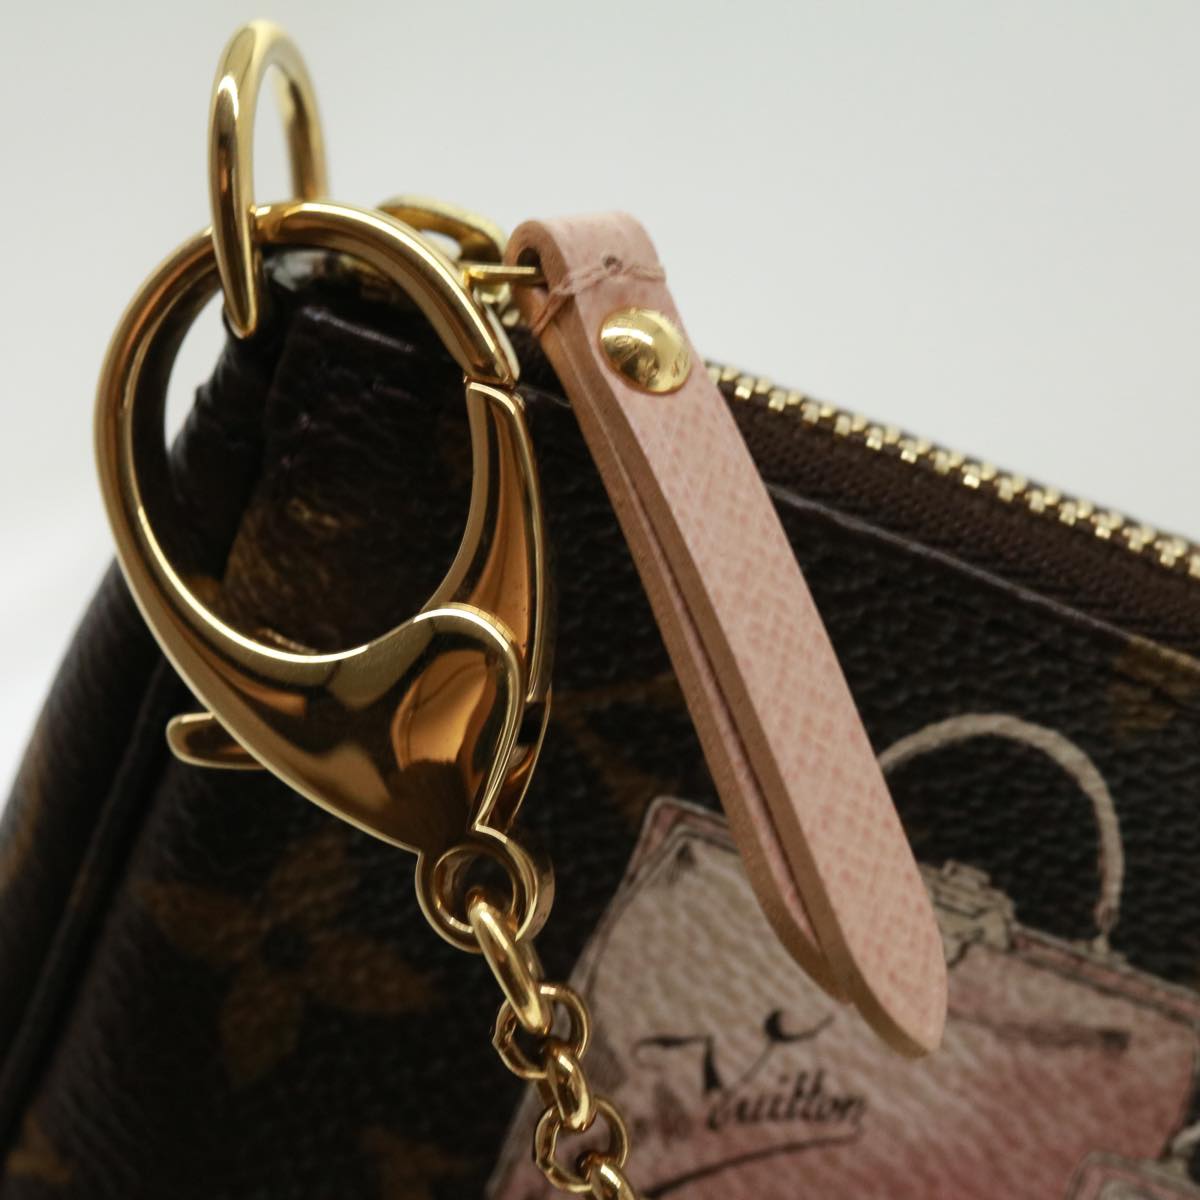 Louis Vuitton Monogram Mini Accessories Pouch M60245 Small Browns Scribe